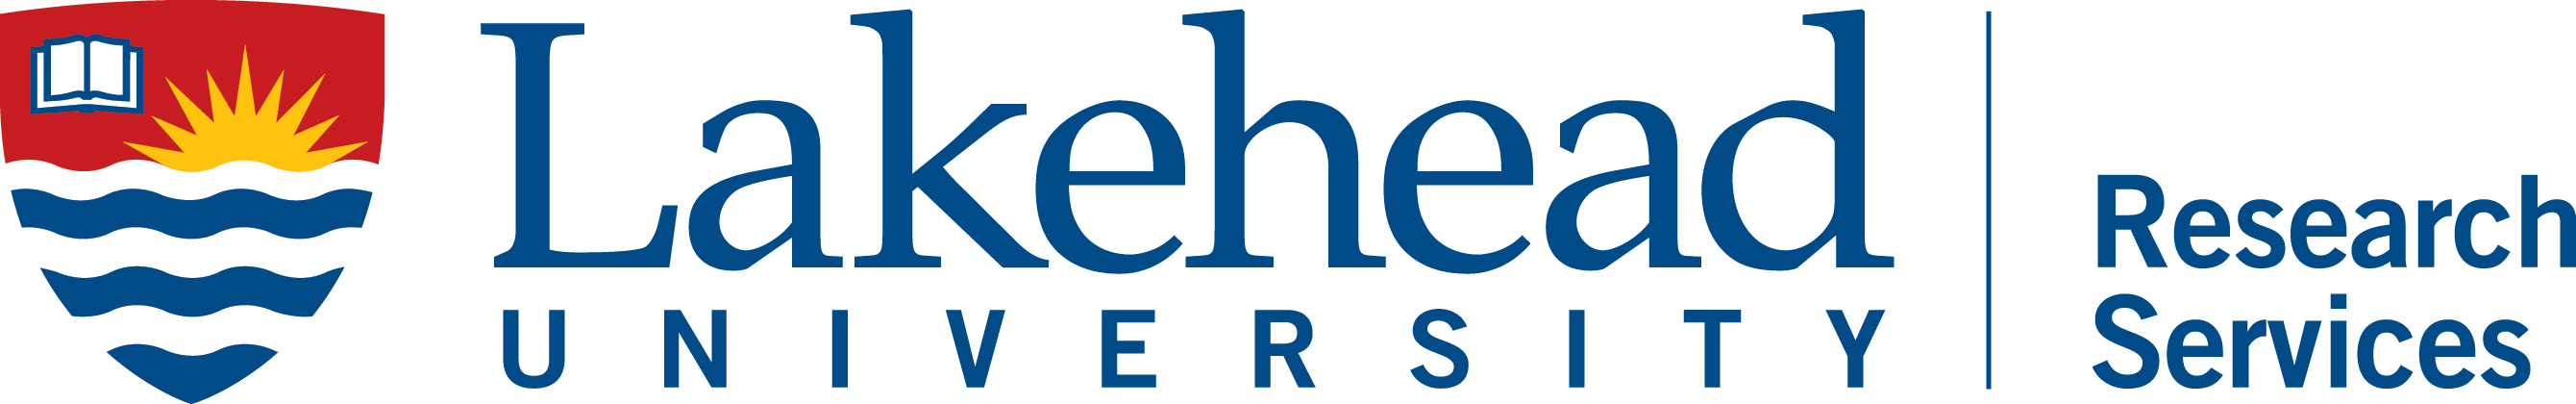 Lakehead University research services logo